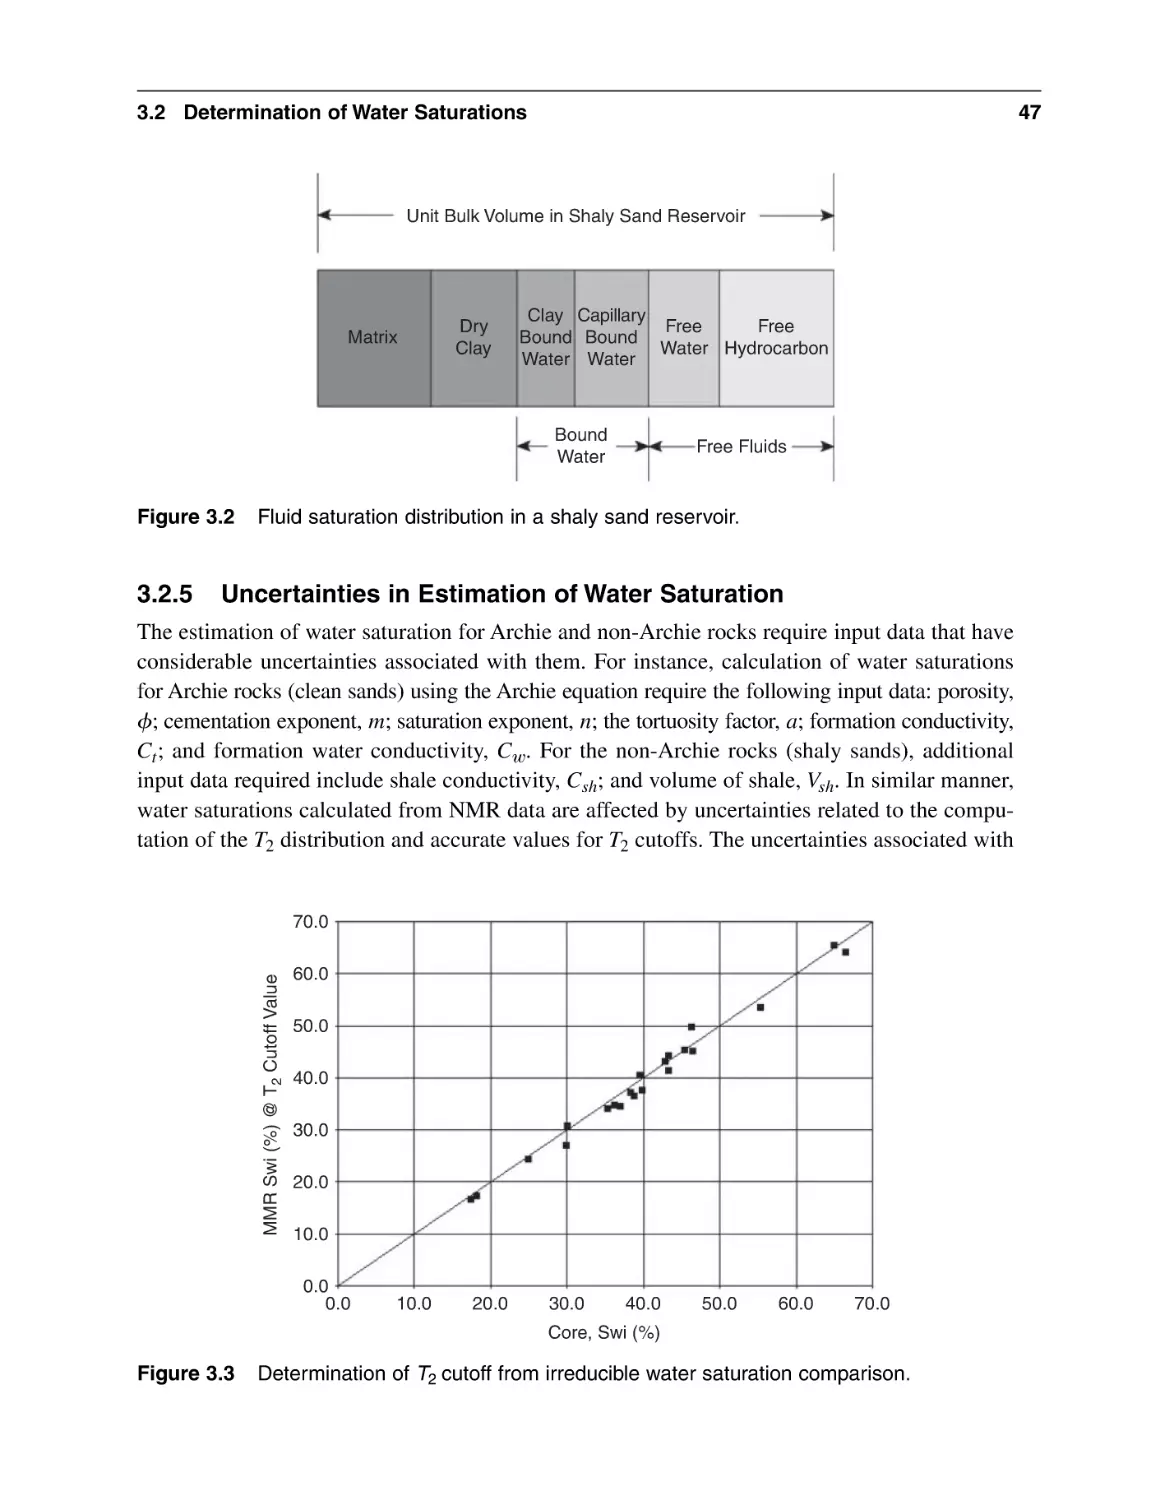 3.2.5 Uncertainties in Estimation of Water Saturation